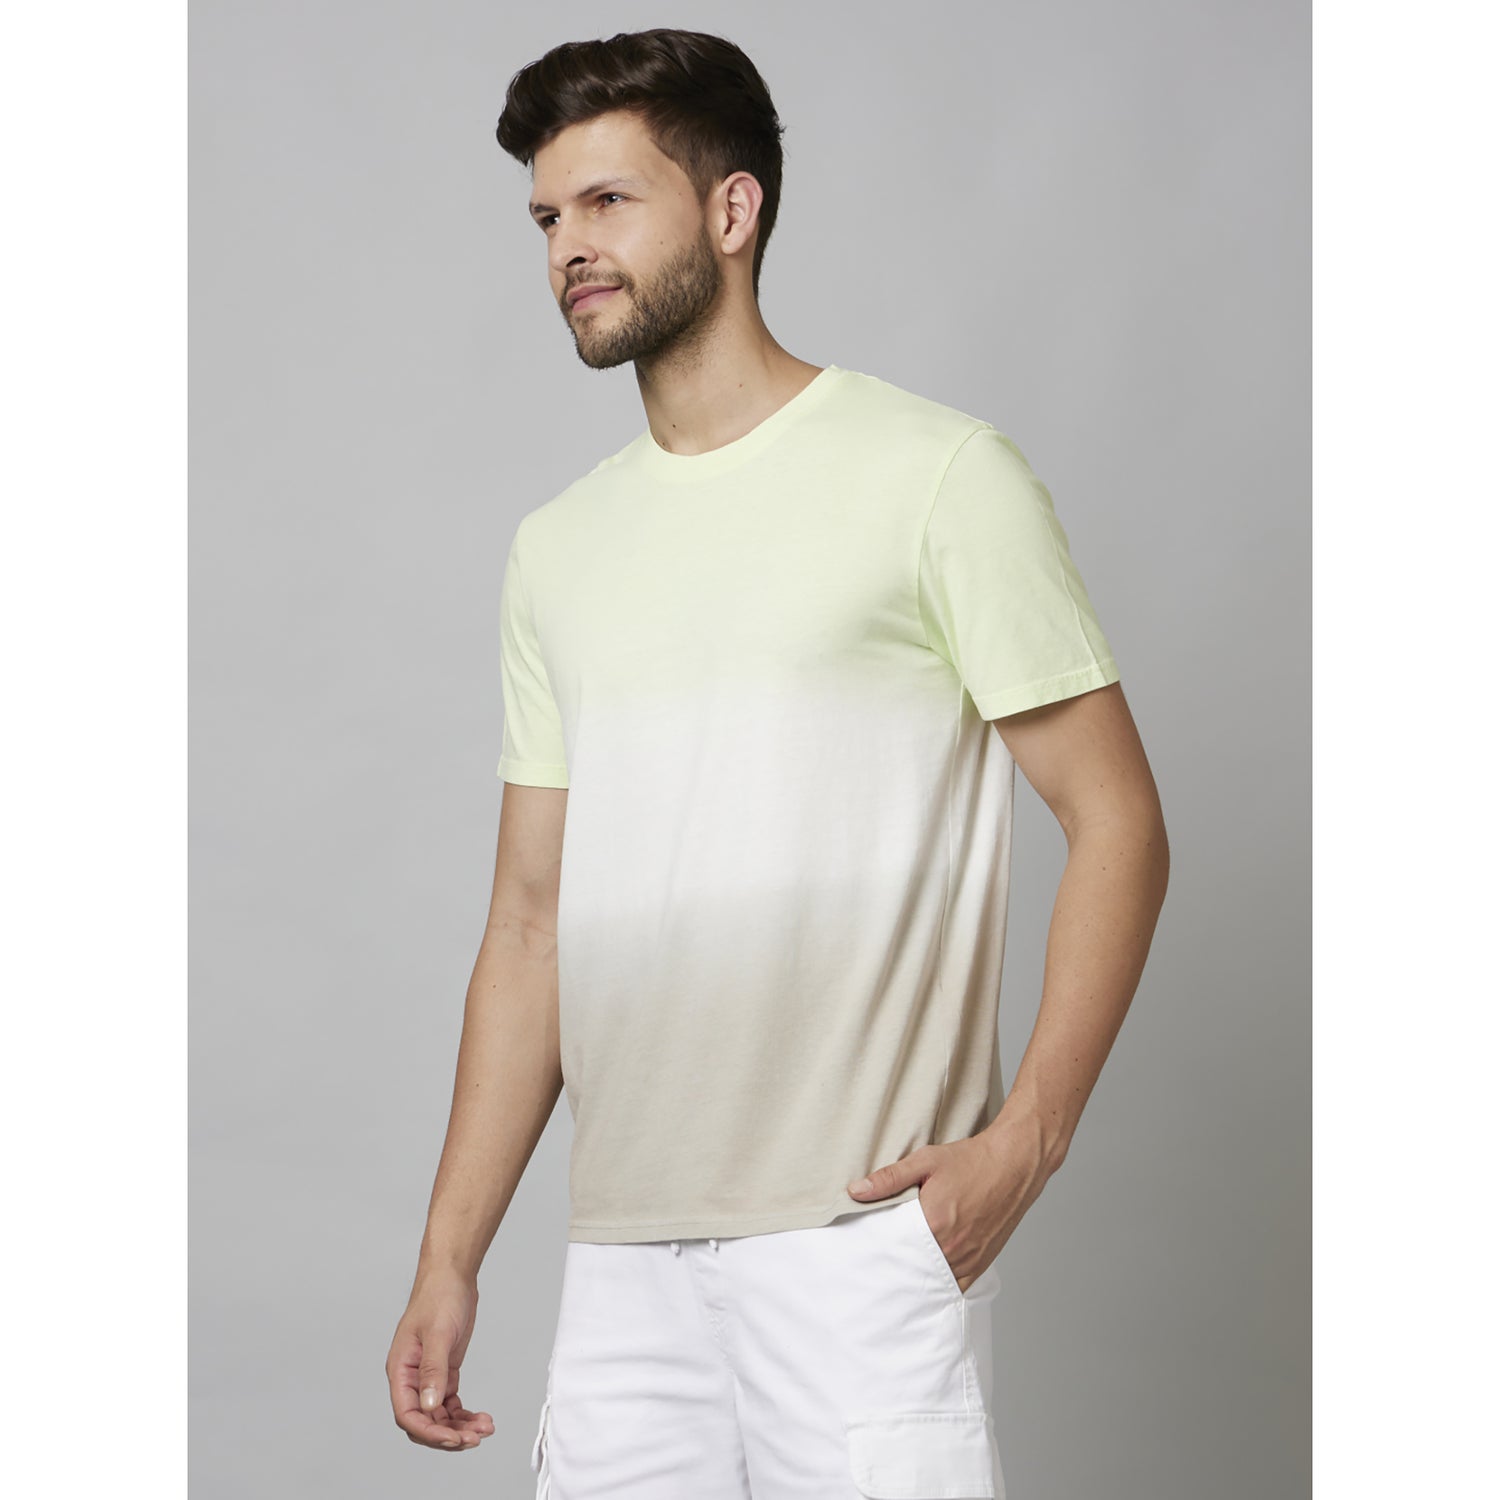 Lime Green Ombre Short Sleeve Cotton T-Shirts (DEUTYE)